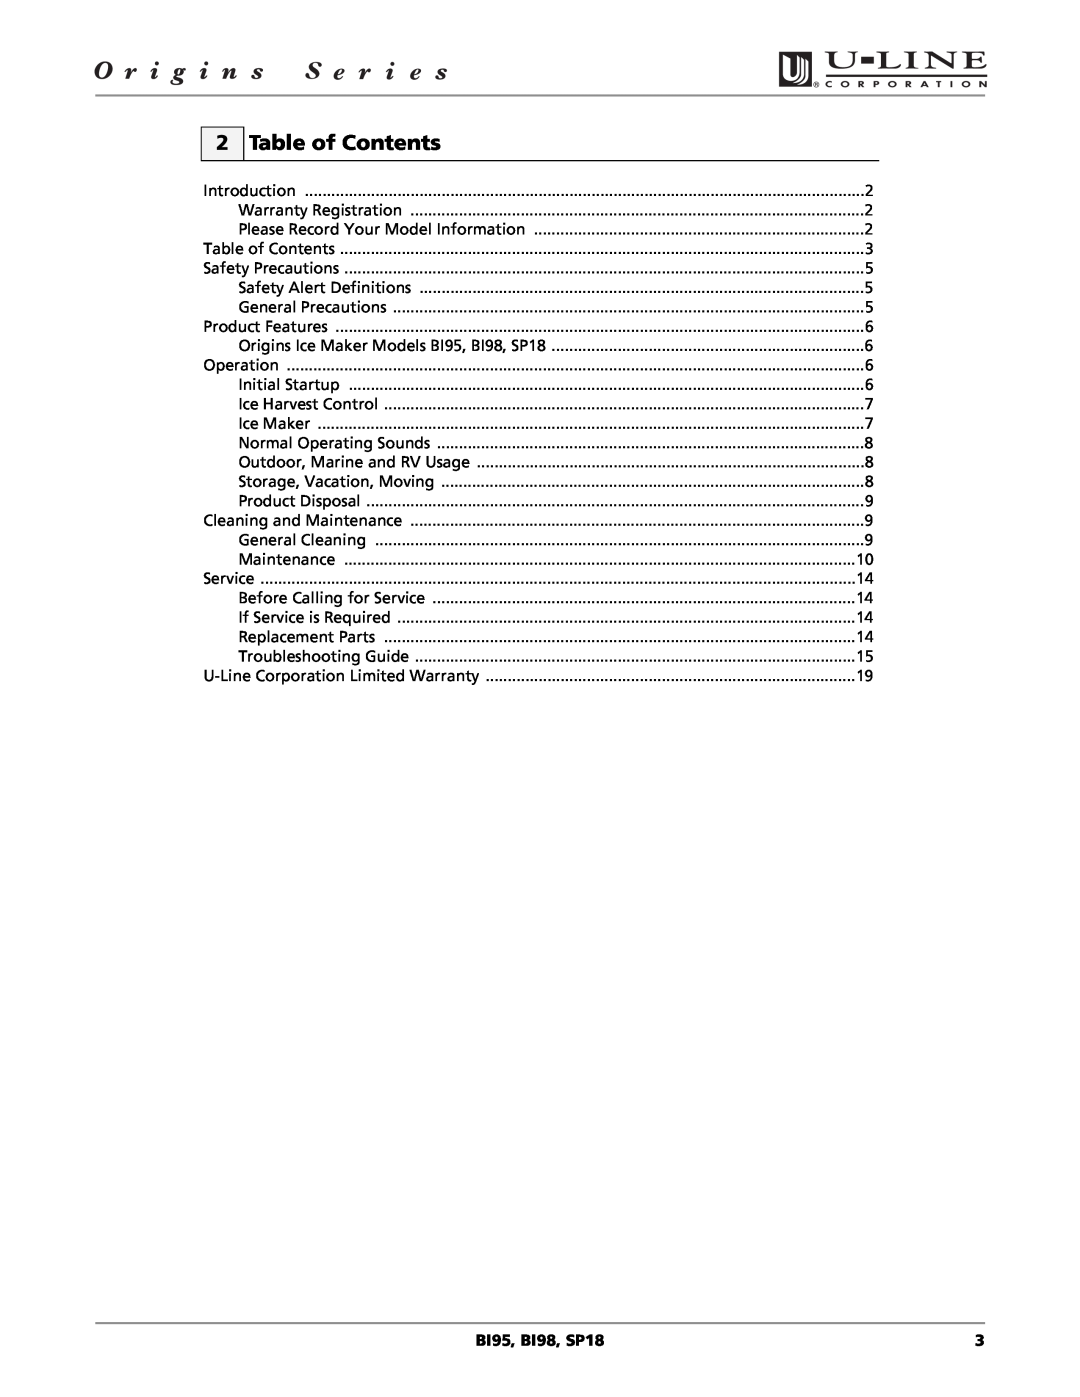 U-Line manual Table of Contents, BI95, BI98, SP18 